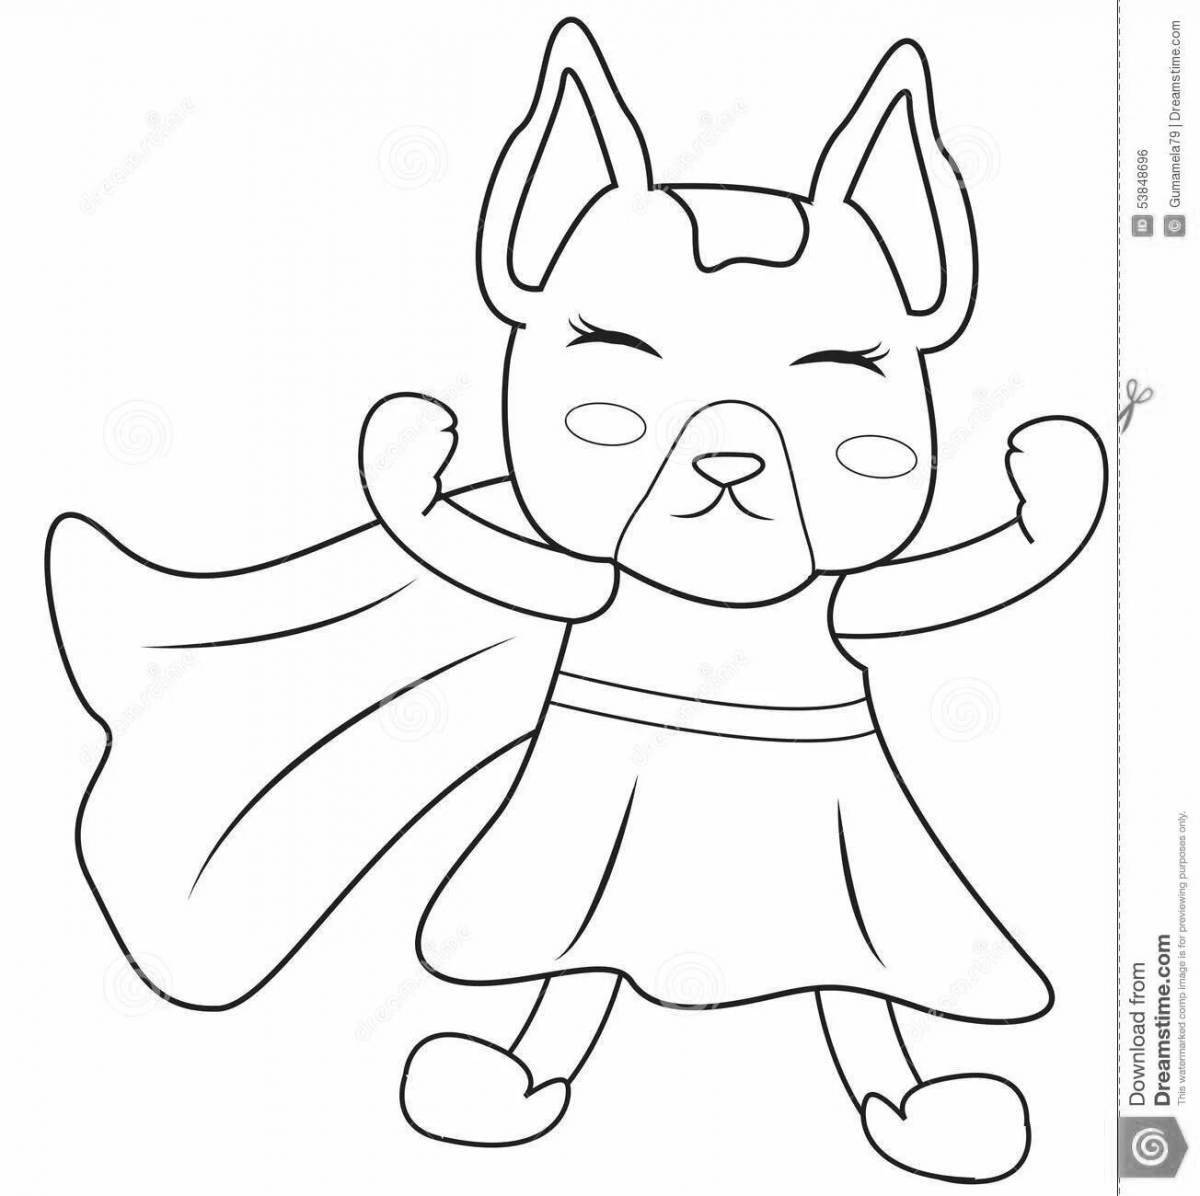 Vibrant superhero dog coloring page